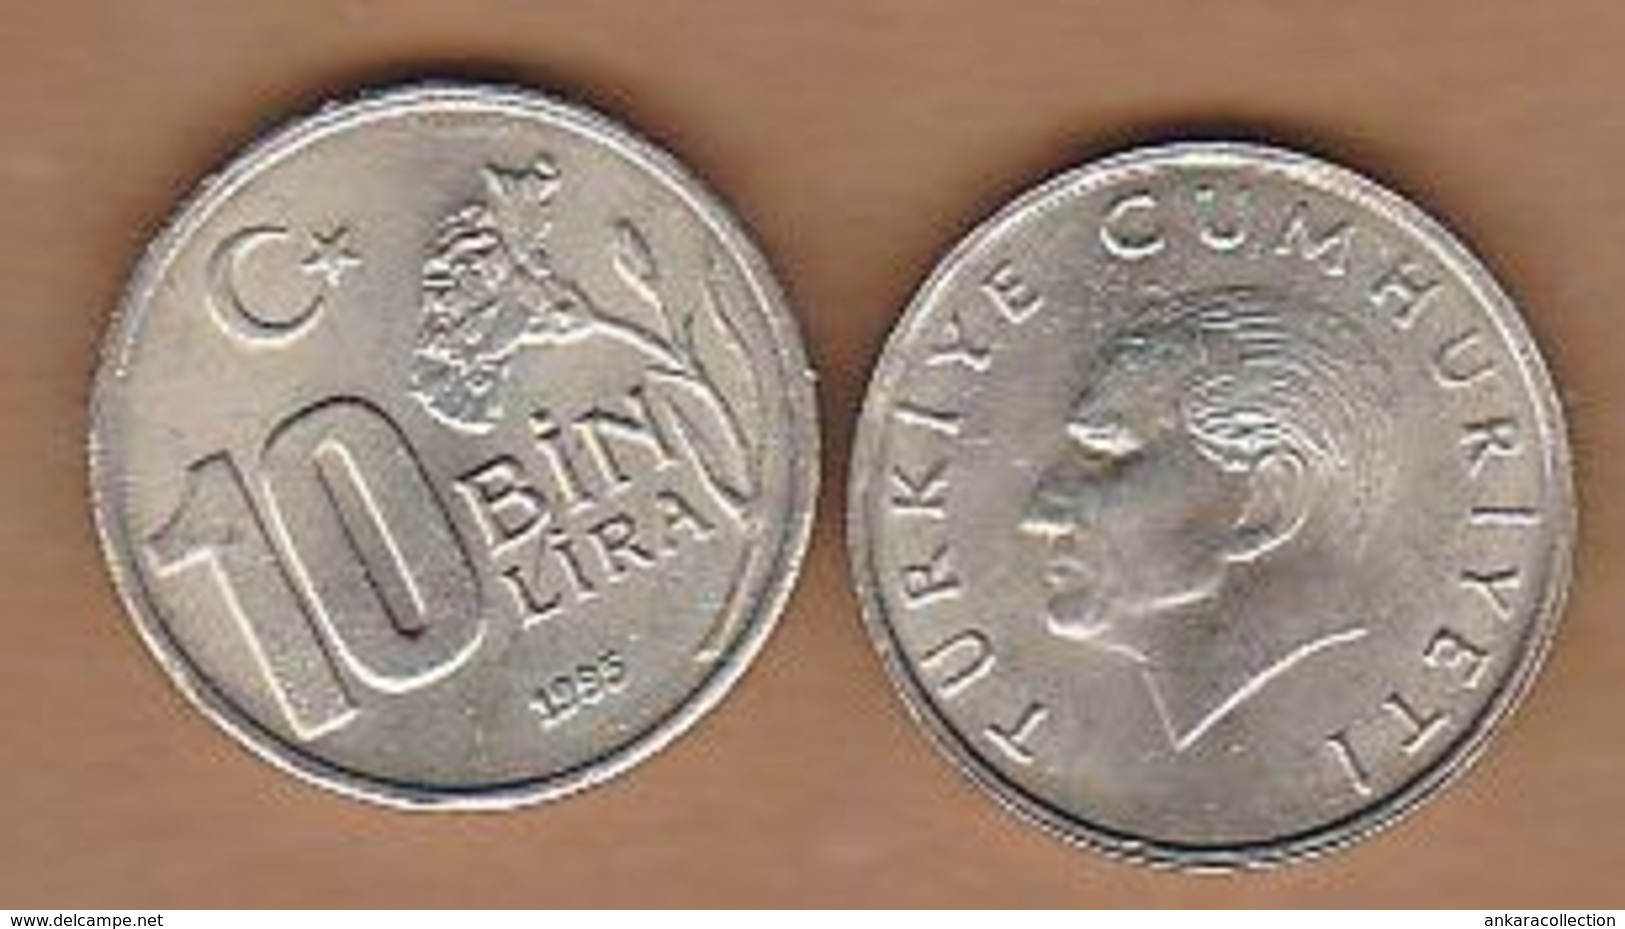 AC - TURKEY 10 000 LIRA 1995 UNCIRCULATED COPPER NICKEL COIN - Turquie